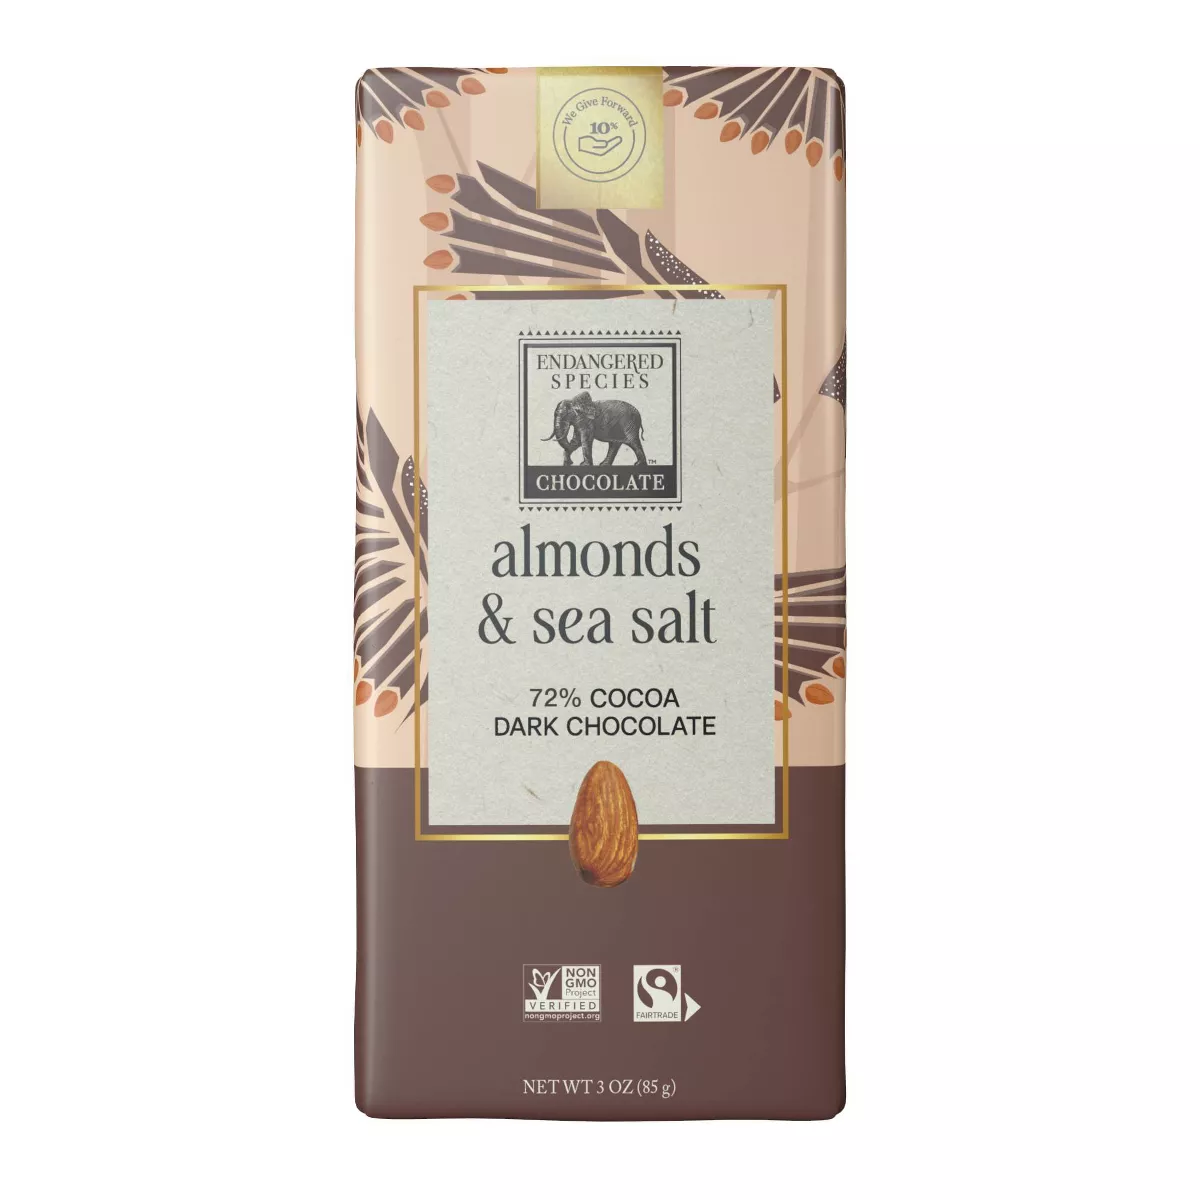 Endangered Species Candy Chocolate Dark Chocolate with Sea Salt & Almonds